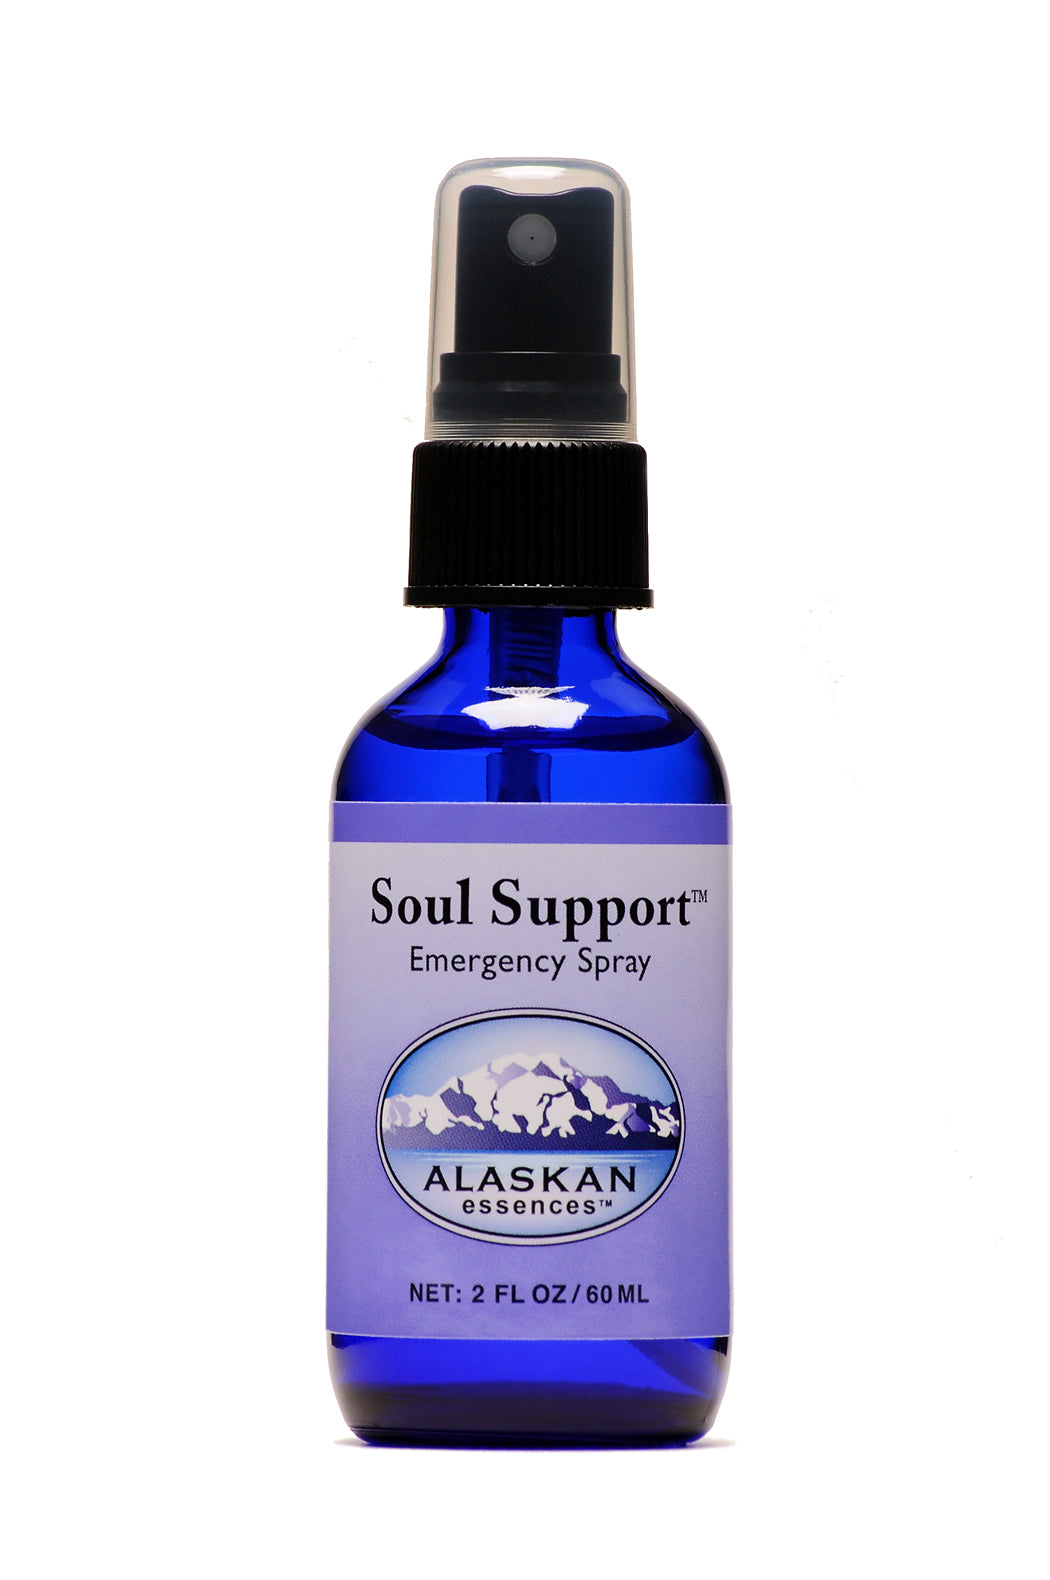 Soul Support essence spray